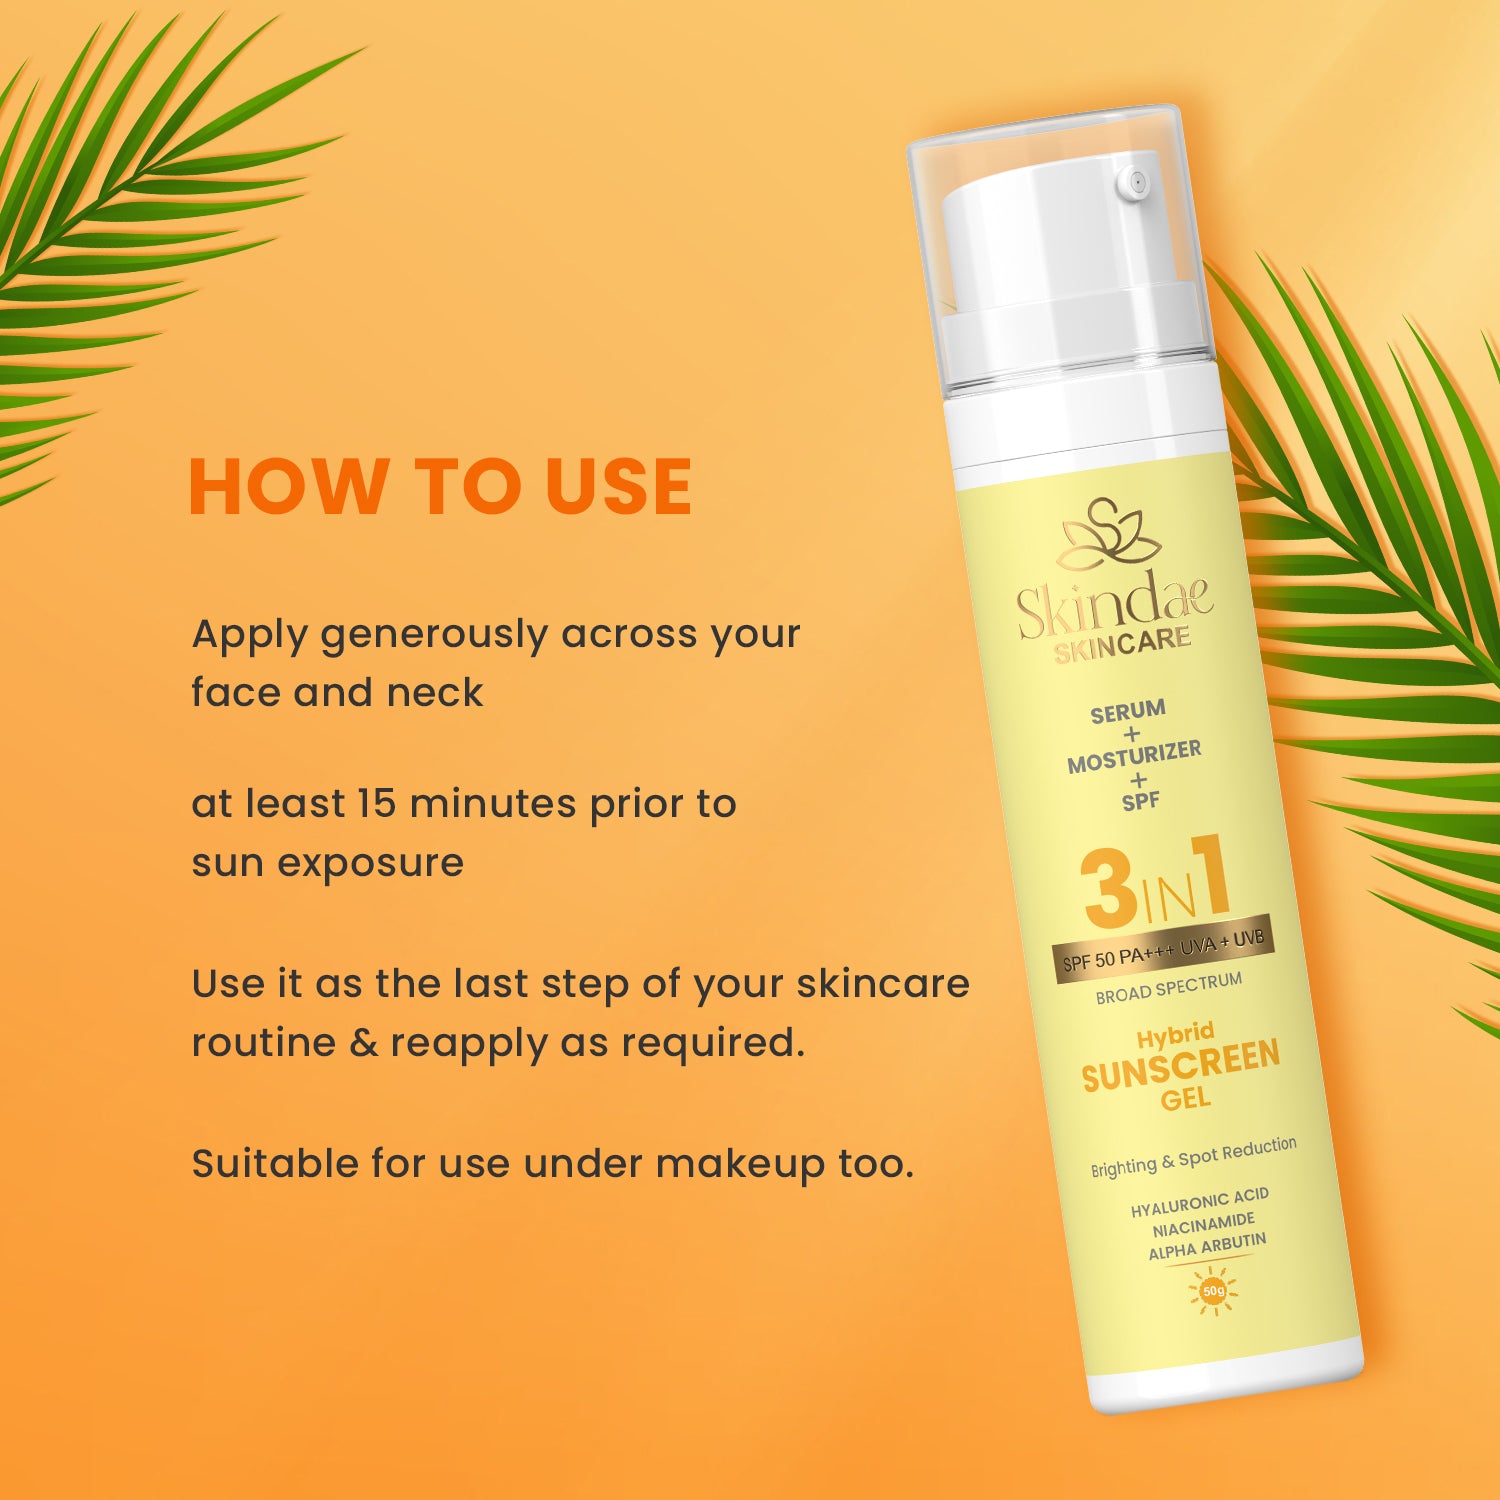 Skindae Sunscreen Gel How to use?